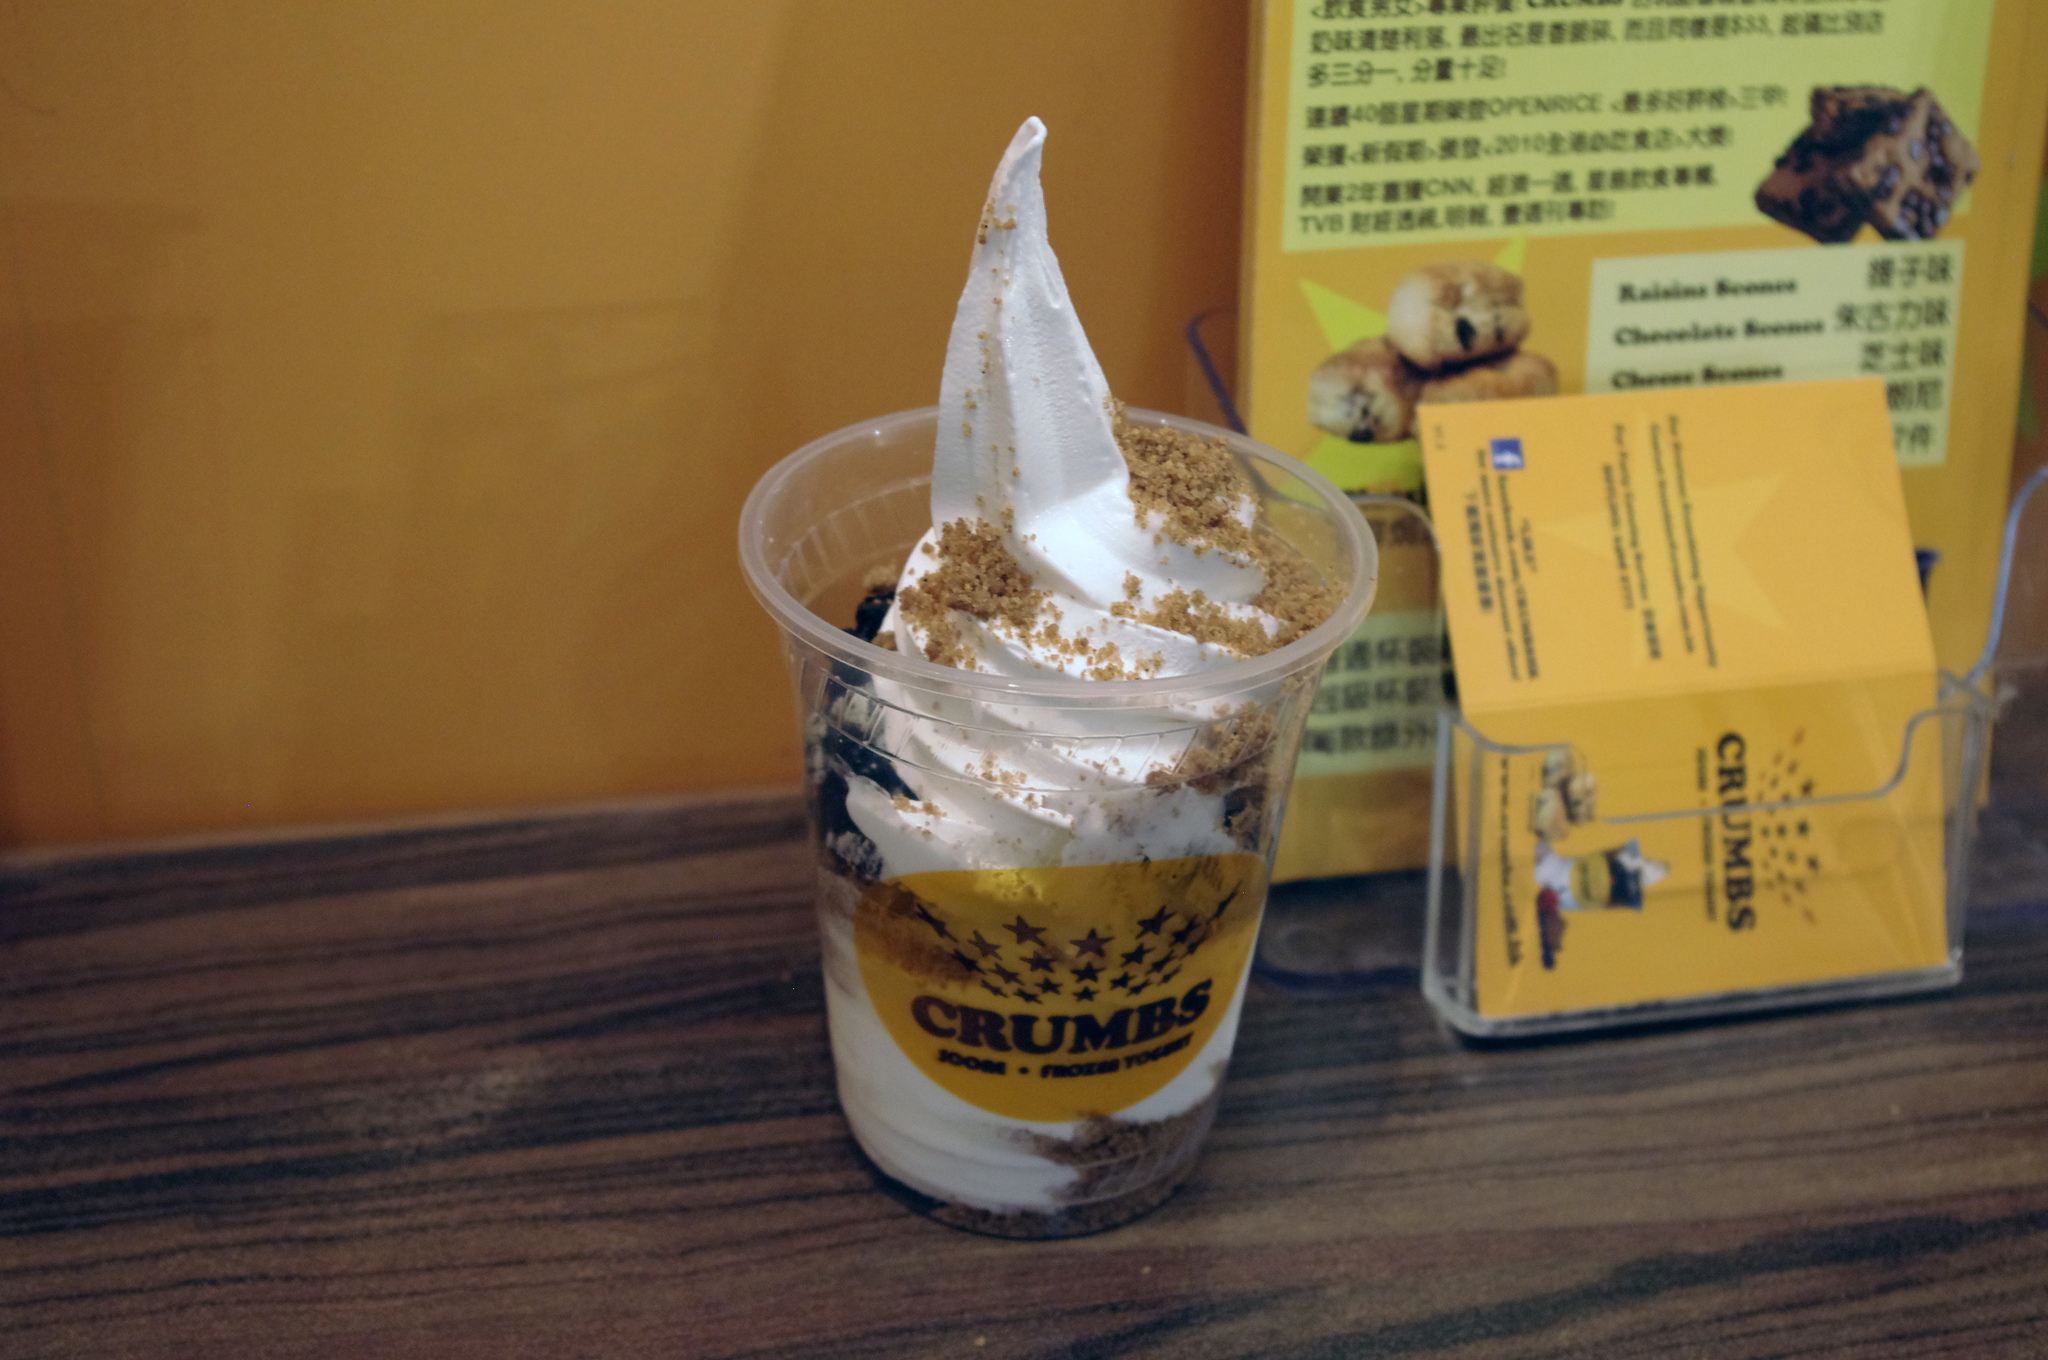 Crumbs frozen yogurt in Hong Kong. Photo by alphacityguides.